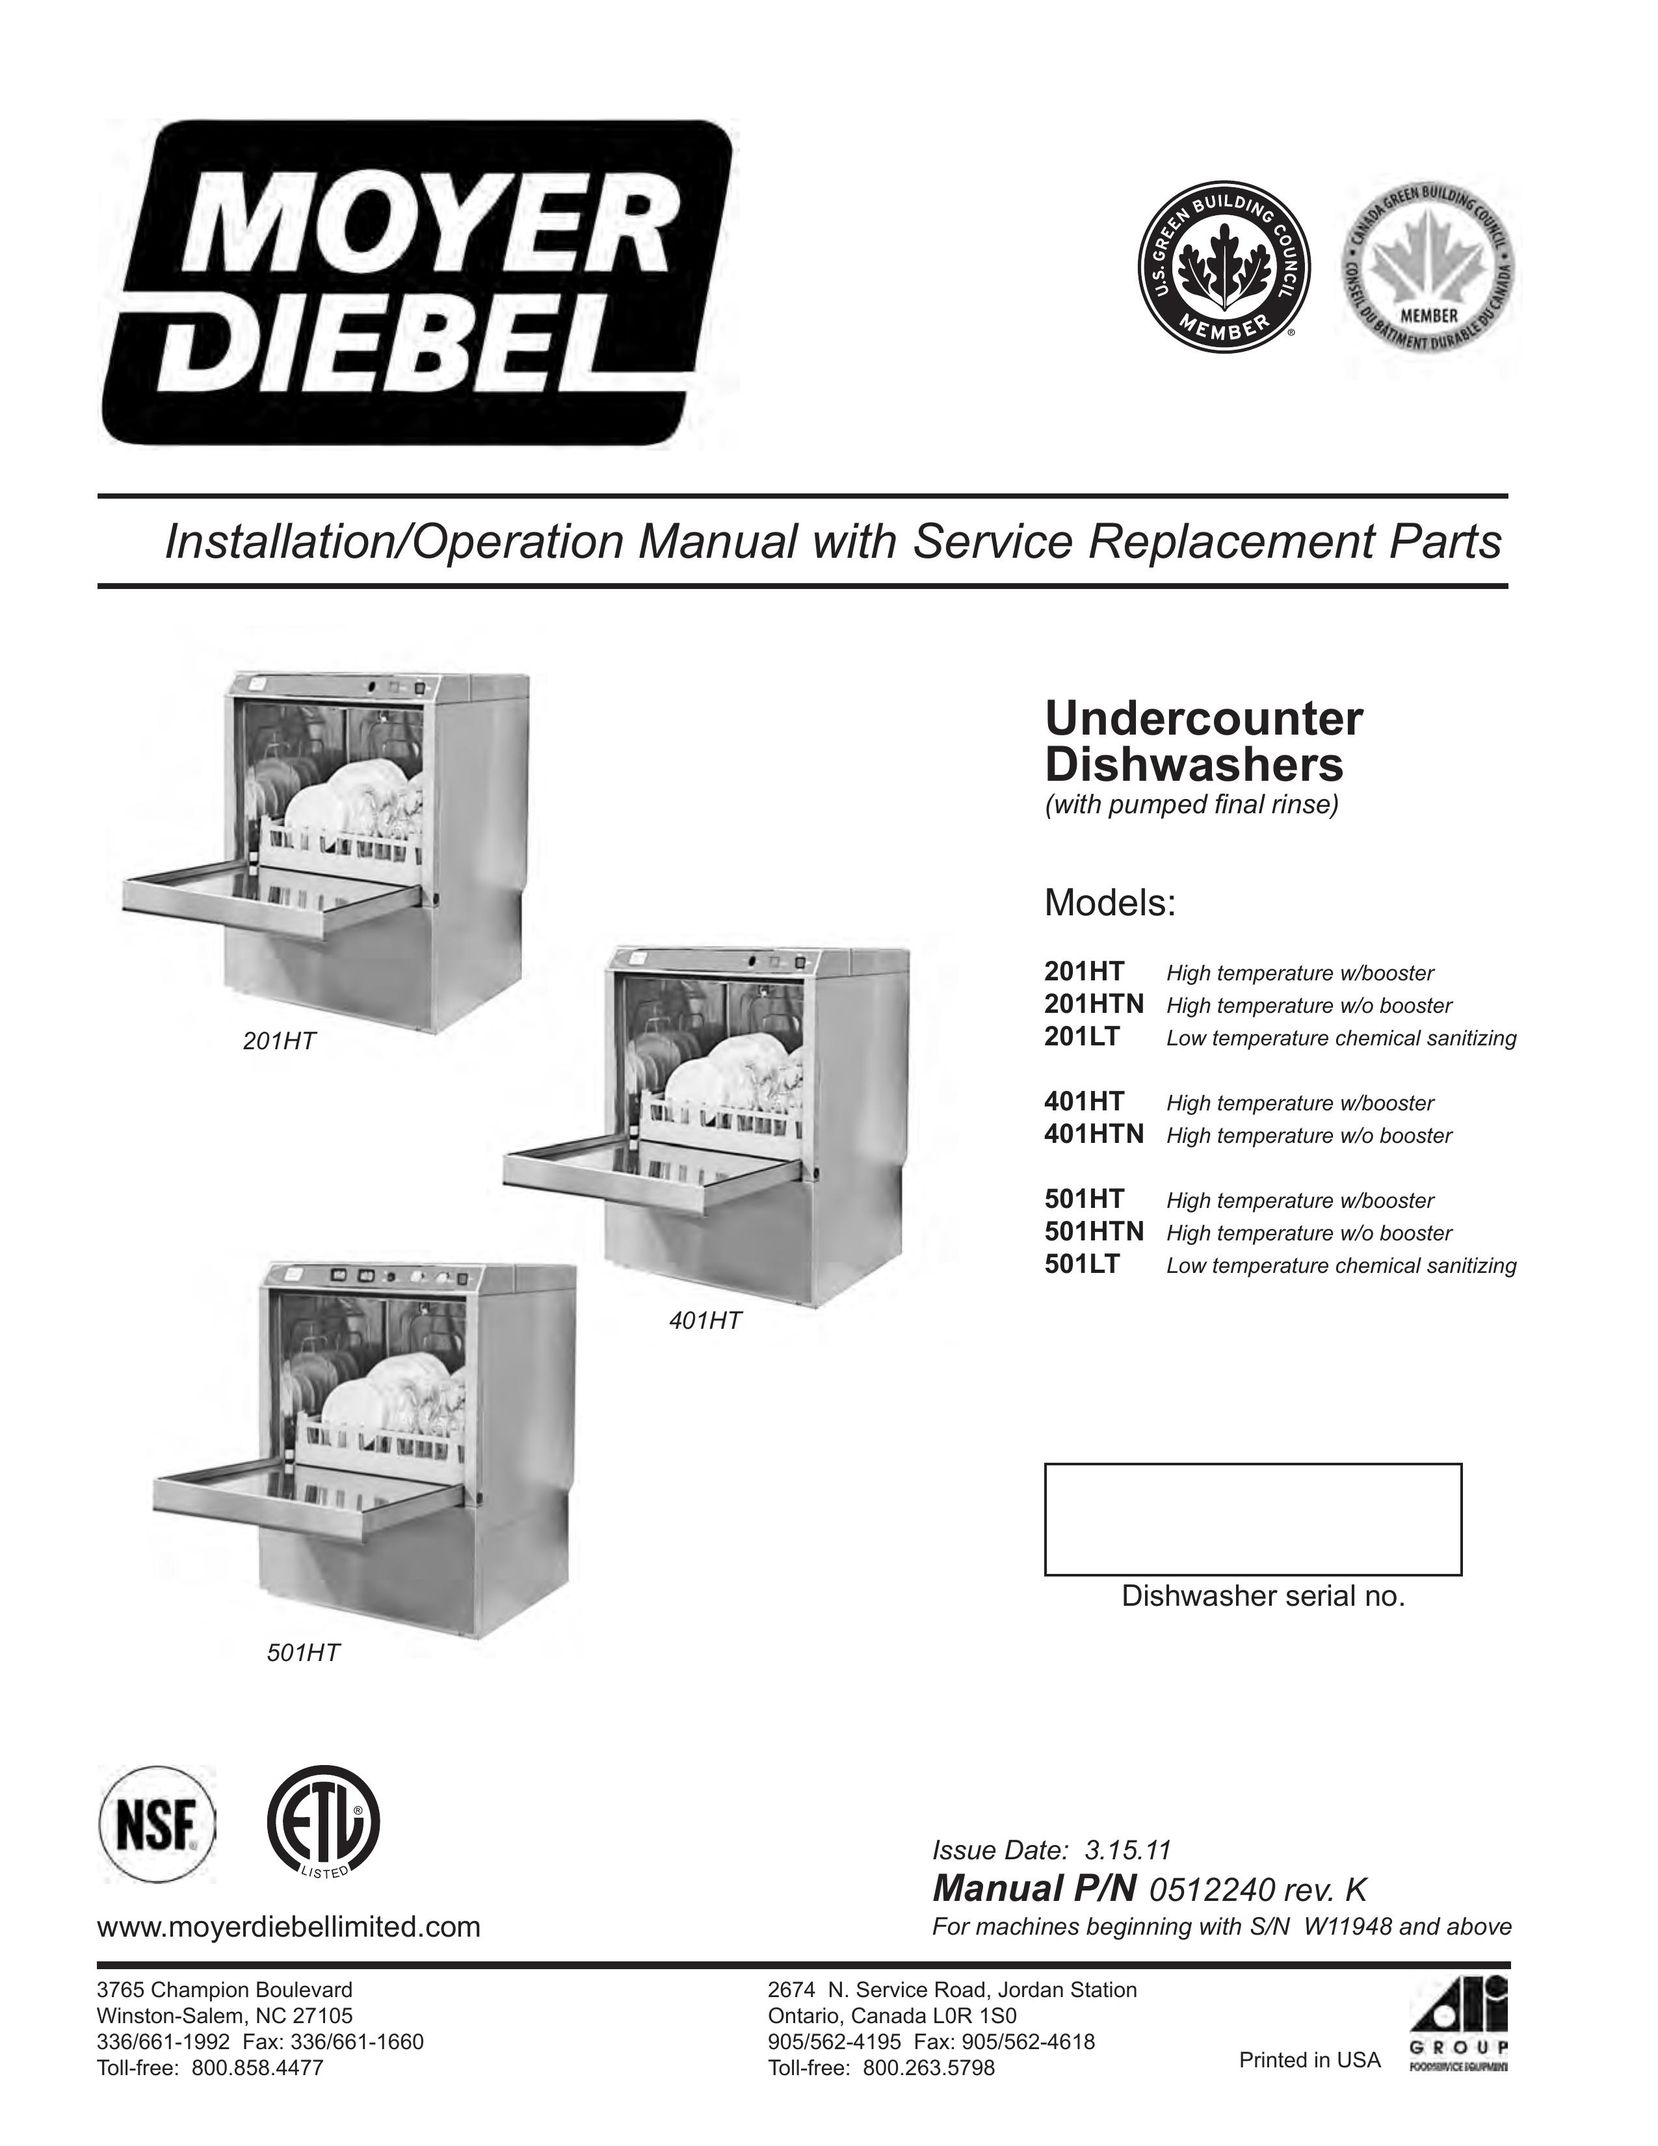 Moyer Diebel 201HTN Dishwasher User Manual